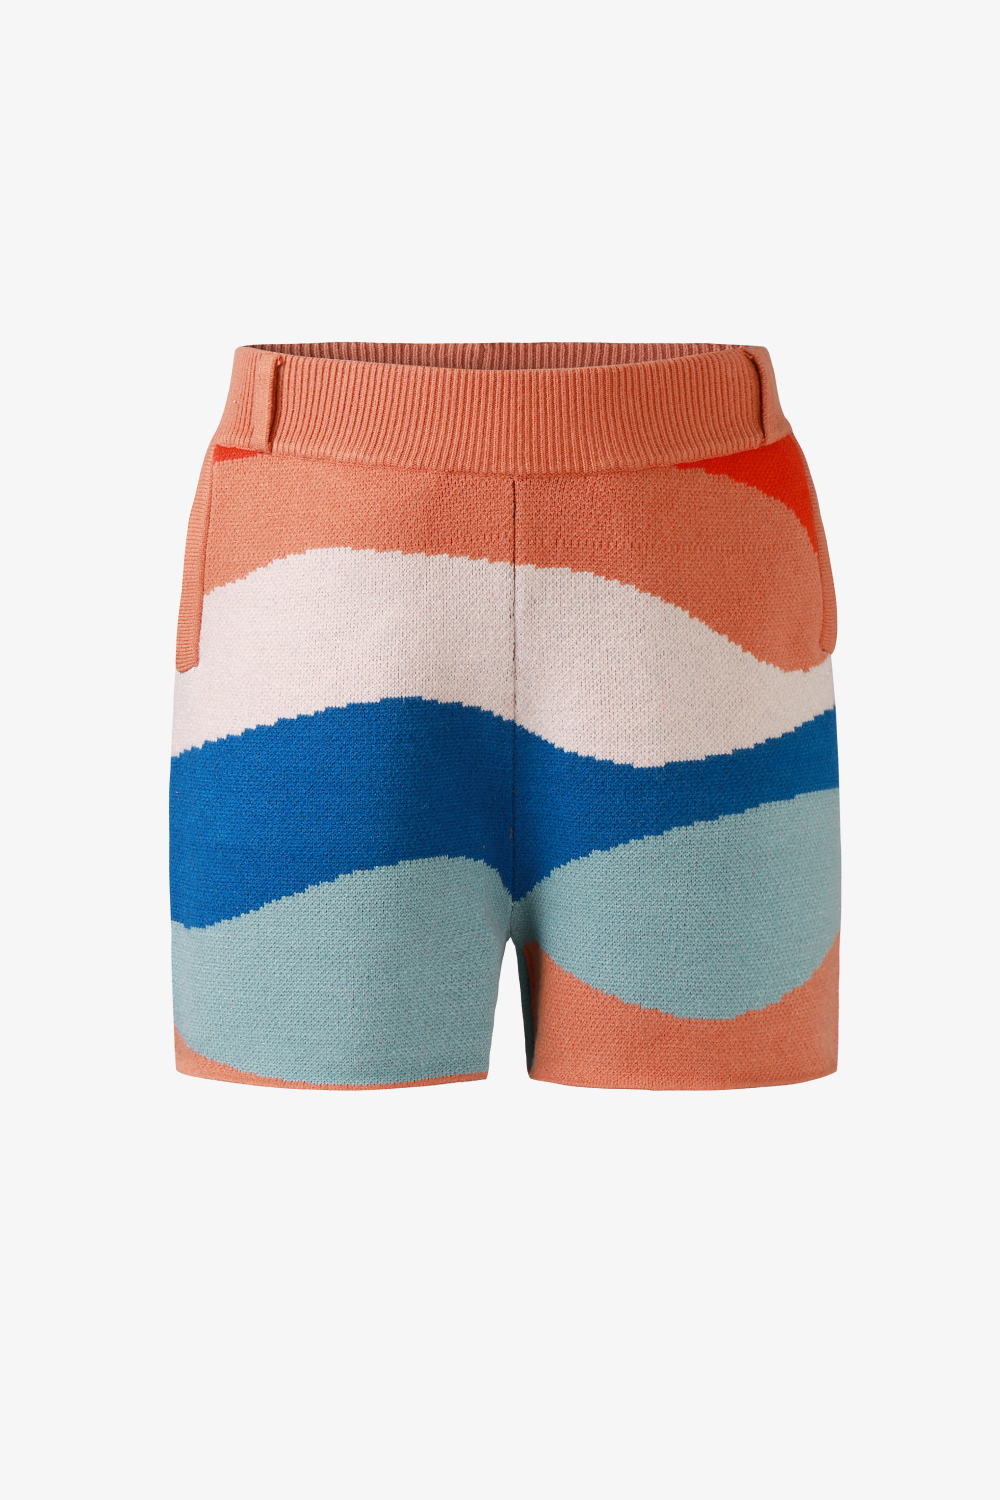 Retro Wave Shorts